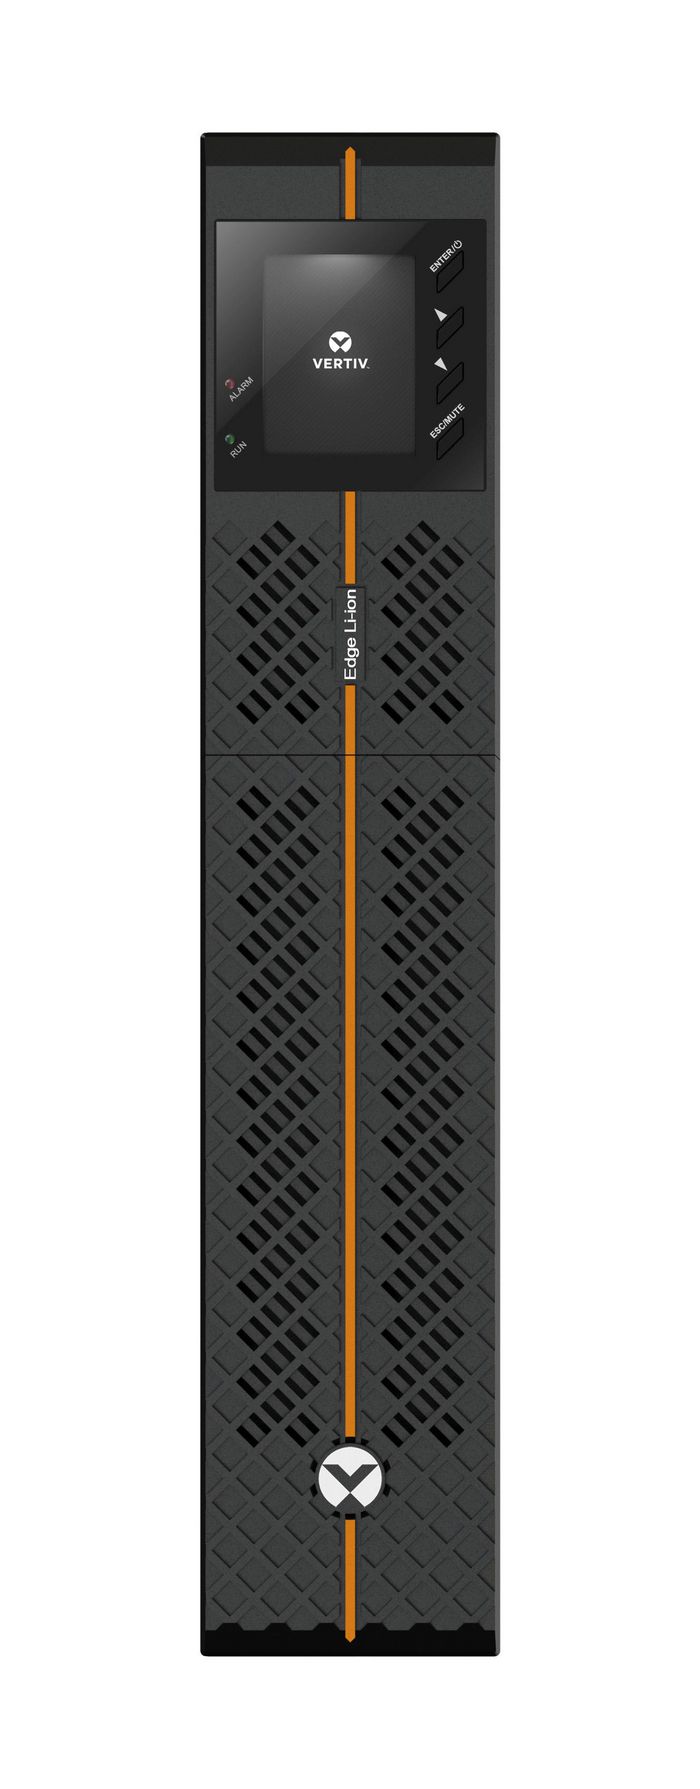 Vertiv Edge Lithium Ion UPS 2200VA 230V Rack/Tower with Li-ion batteries - W126681485